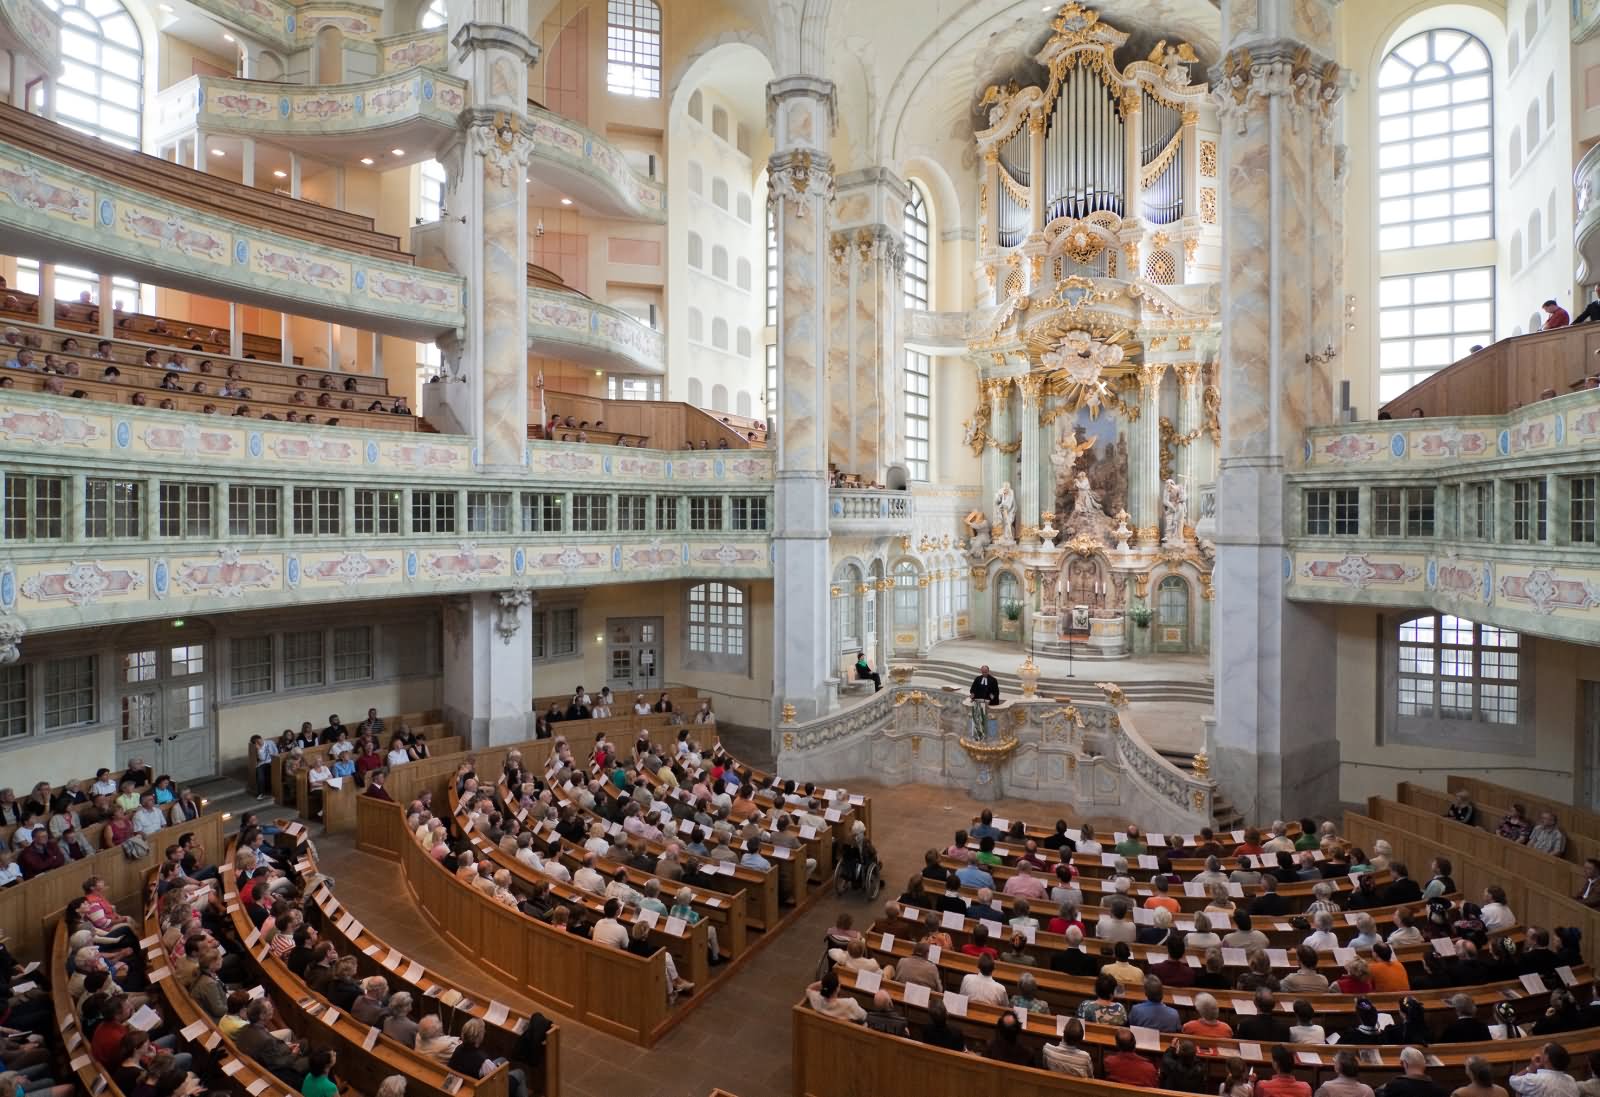 Inside Picture Of Frauenkirche Dresden During Mass